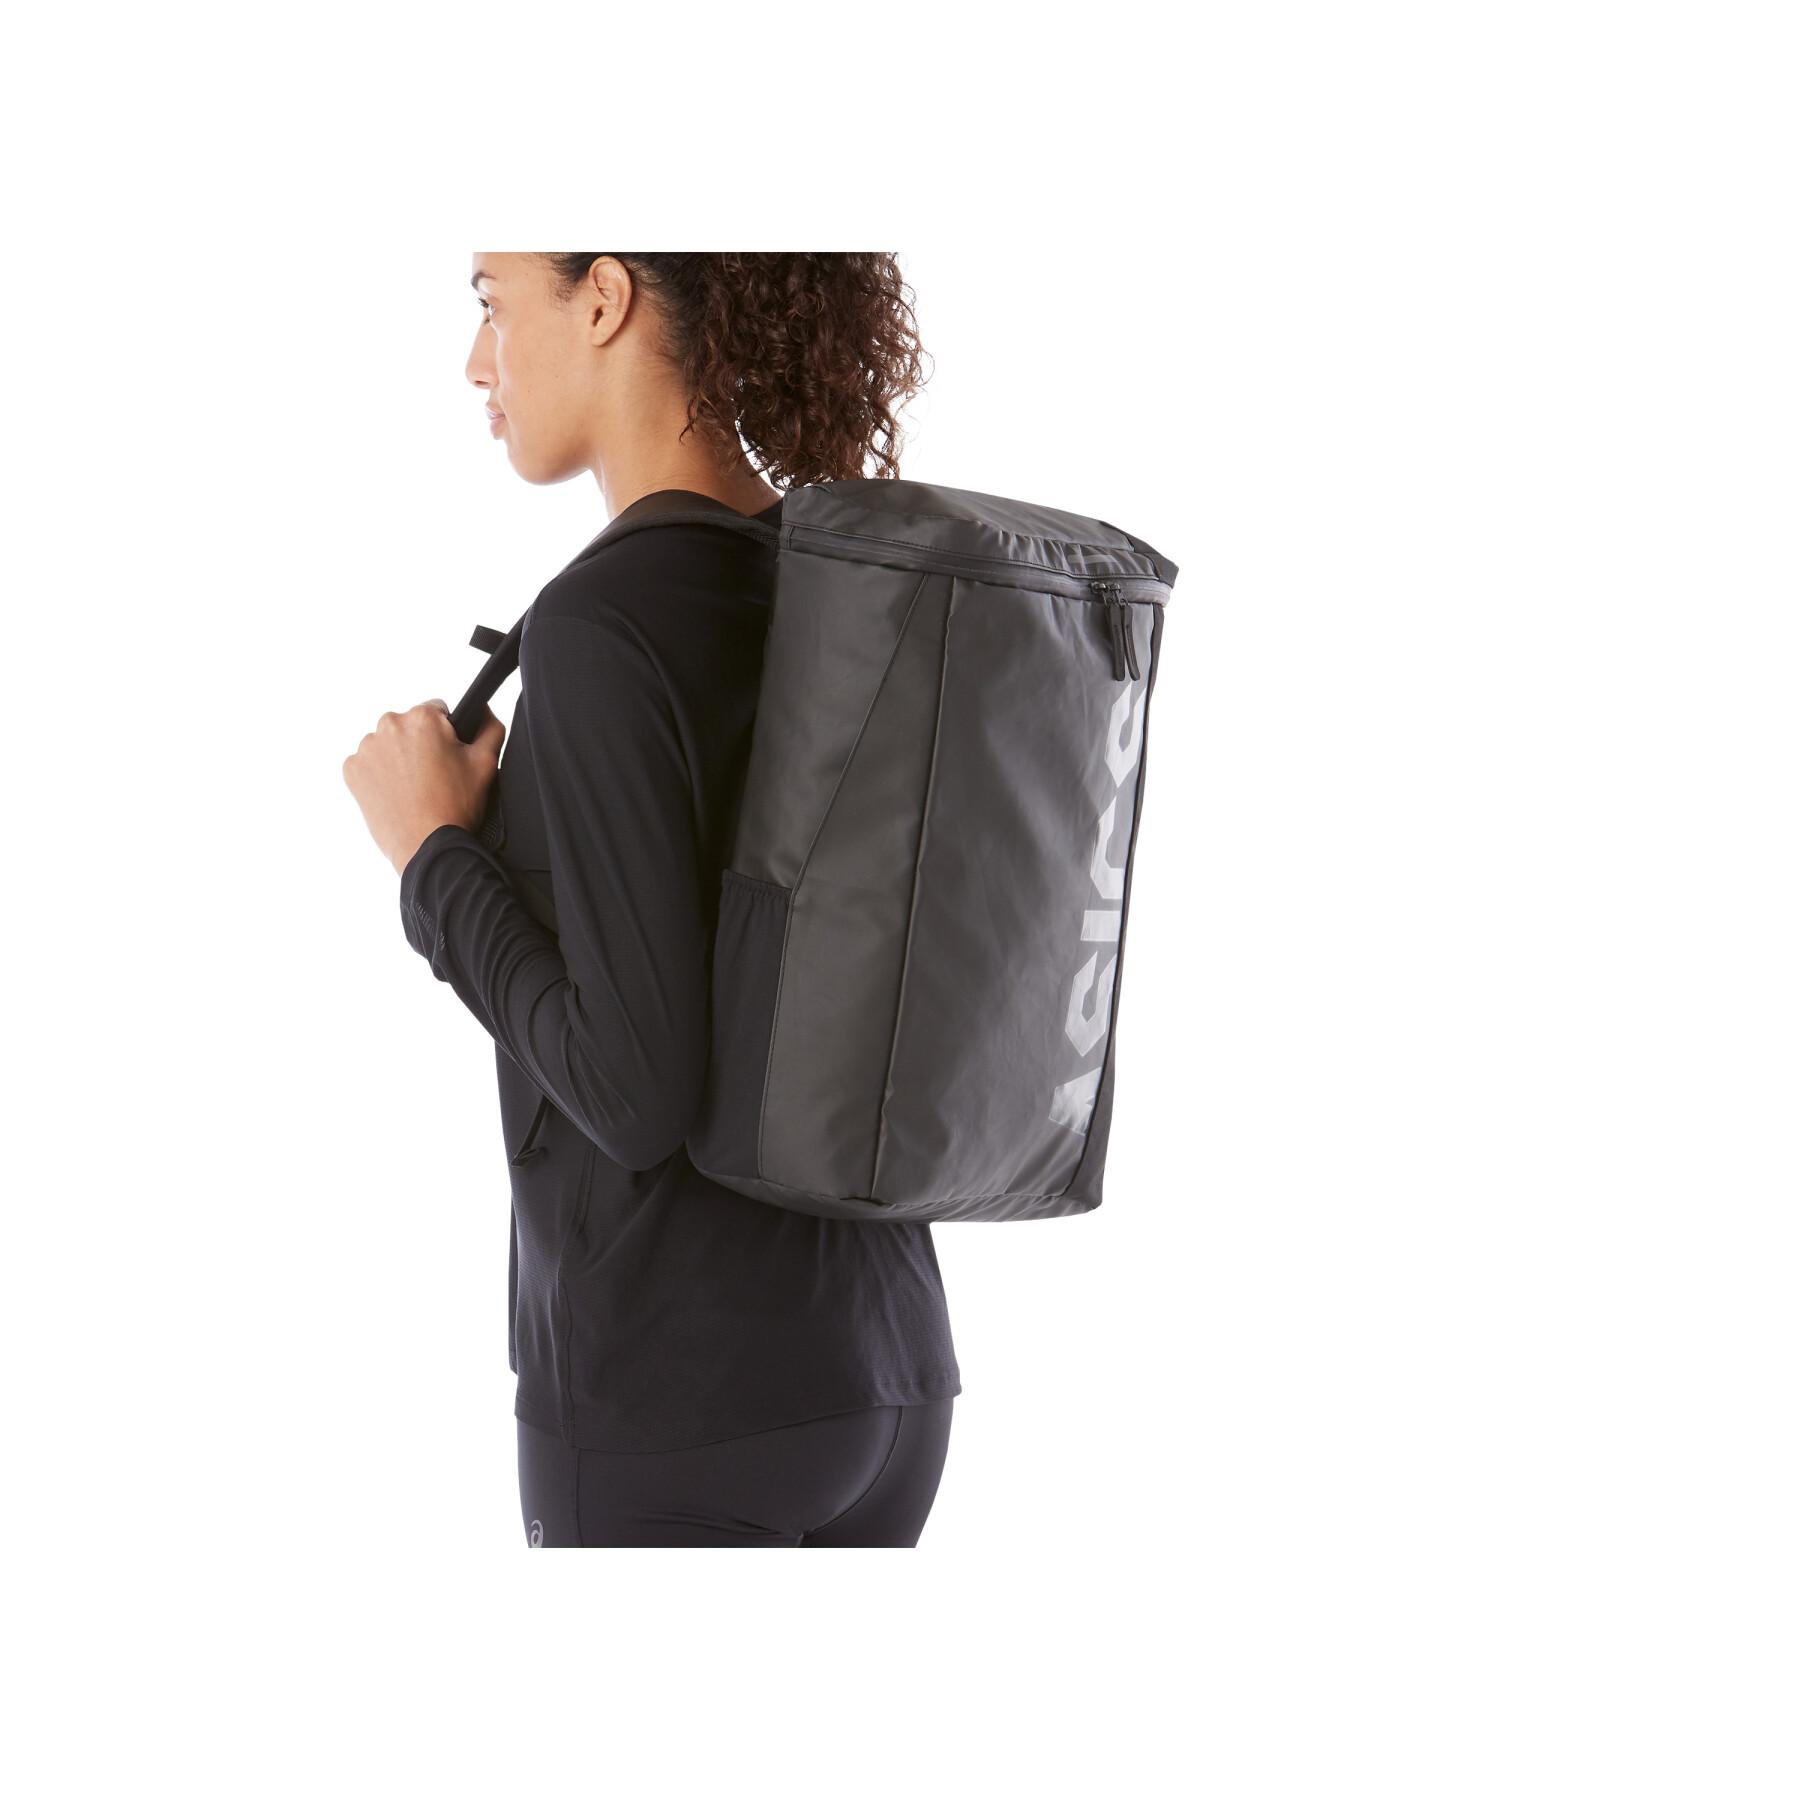 Backpack Asics Commuter Bag